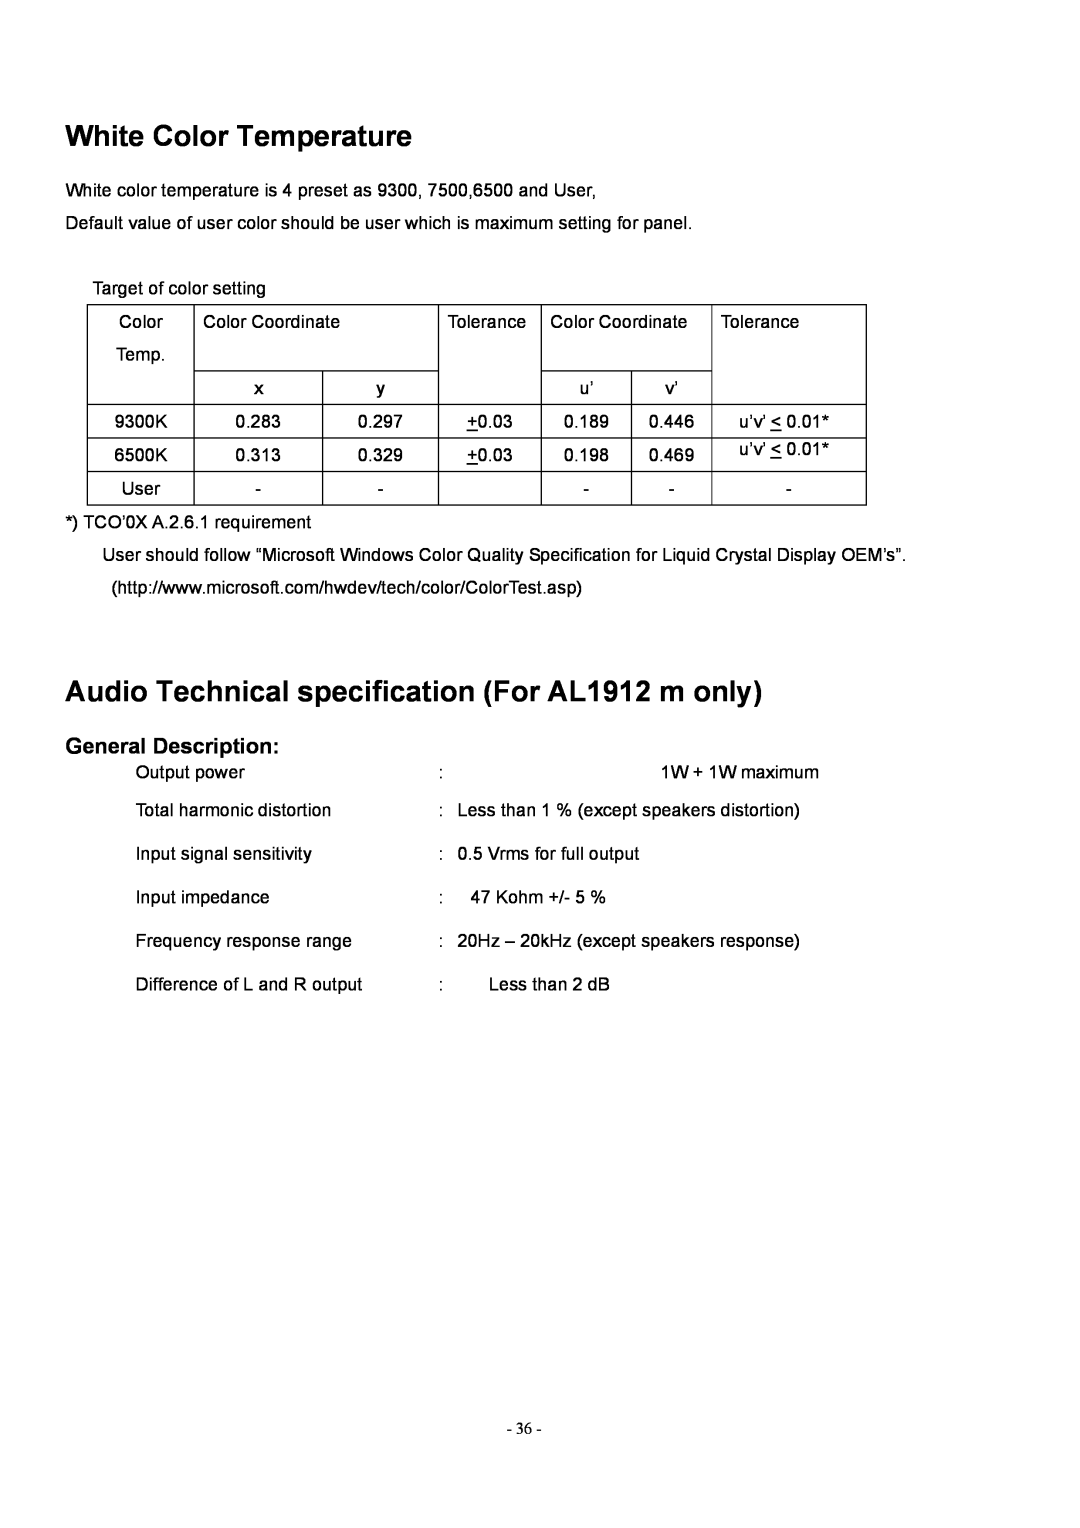 Acer manual White Color Temperature, Audio Technical specification For AL1912 m only, General Description 